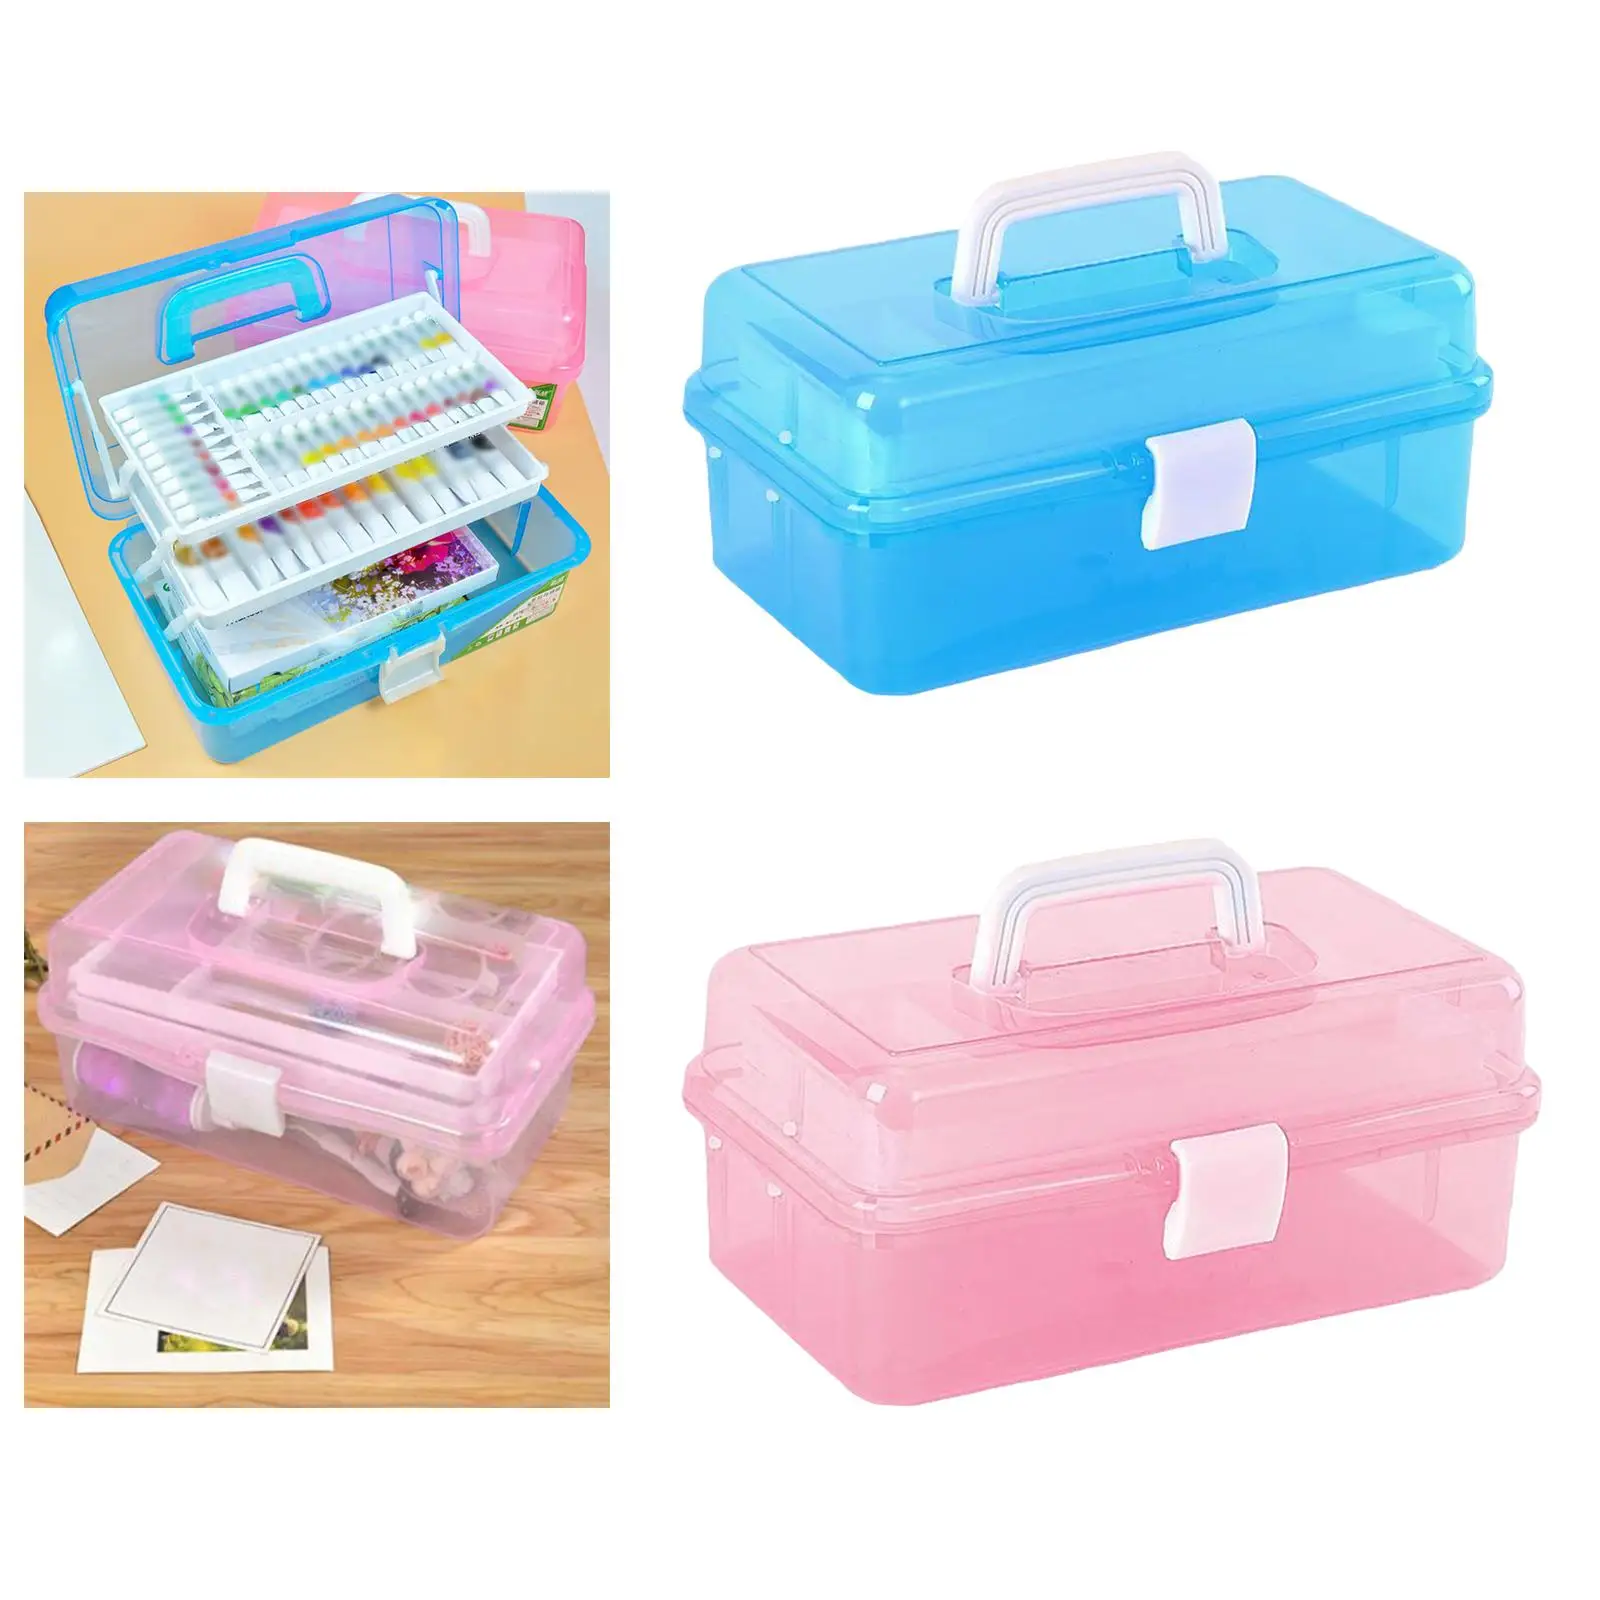 https://ae01.alicdn.com/kf/S7c63444488e646c1998a27476b9cad57L/Multipurpose-Storage-Box-Organizer-Folding-Tool-Box-Art-Craft-with-Lift-Up-Trays-Hobby-Fun-DIY.jpg